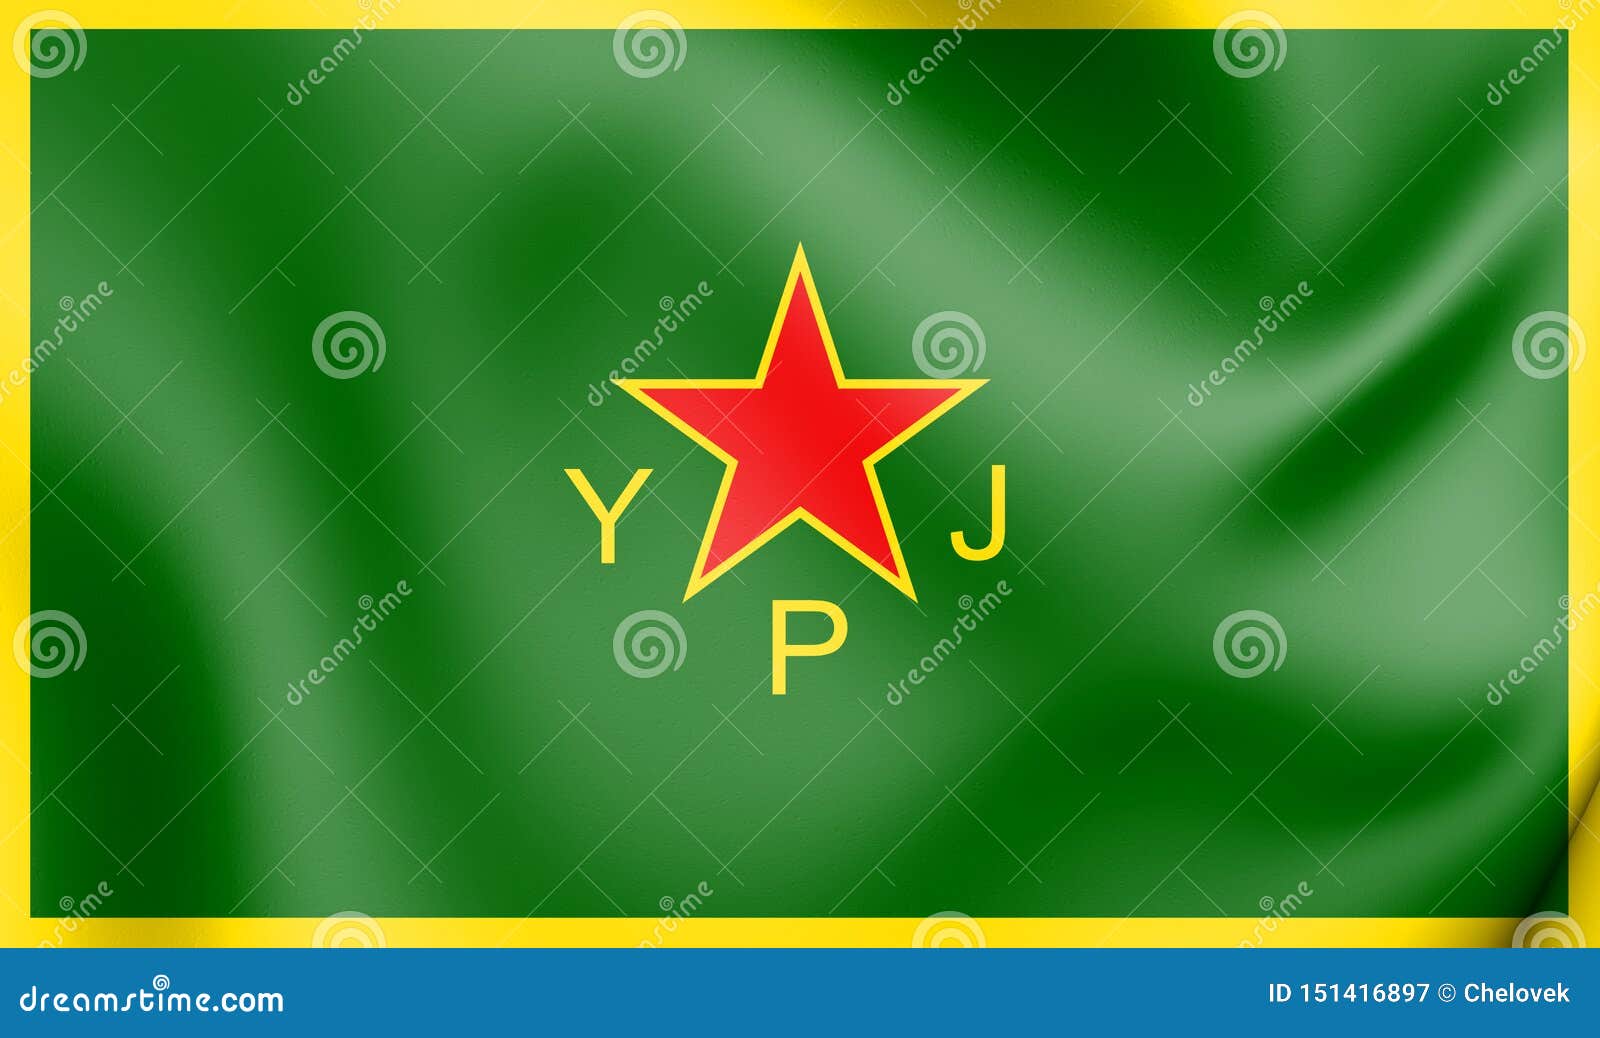  Fyon Women s Protection Units YPJ Flag ; female